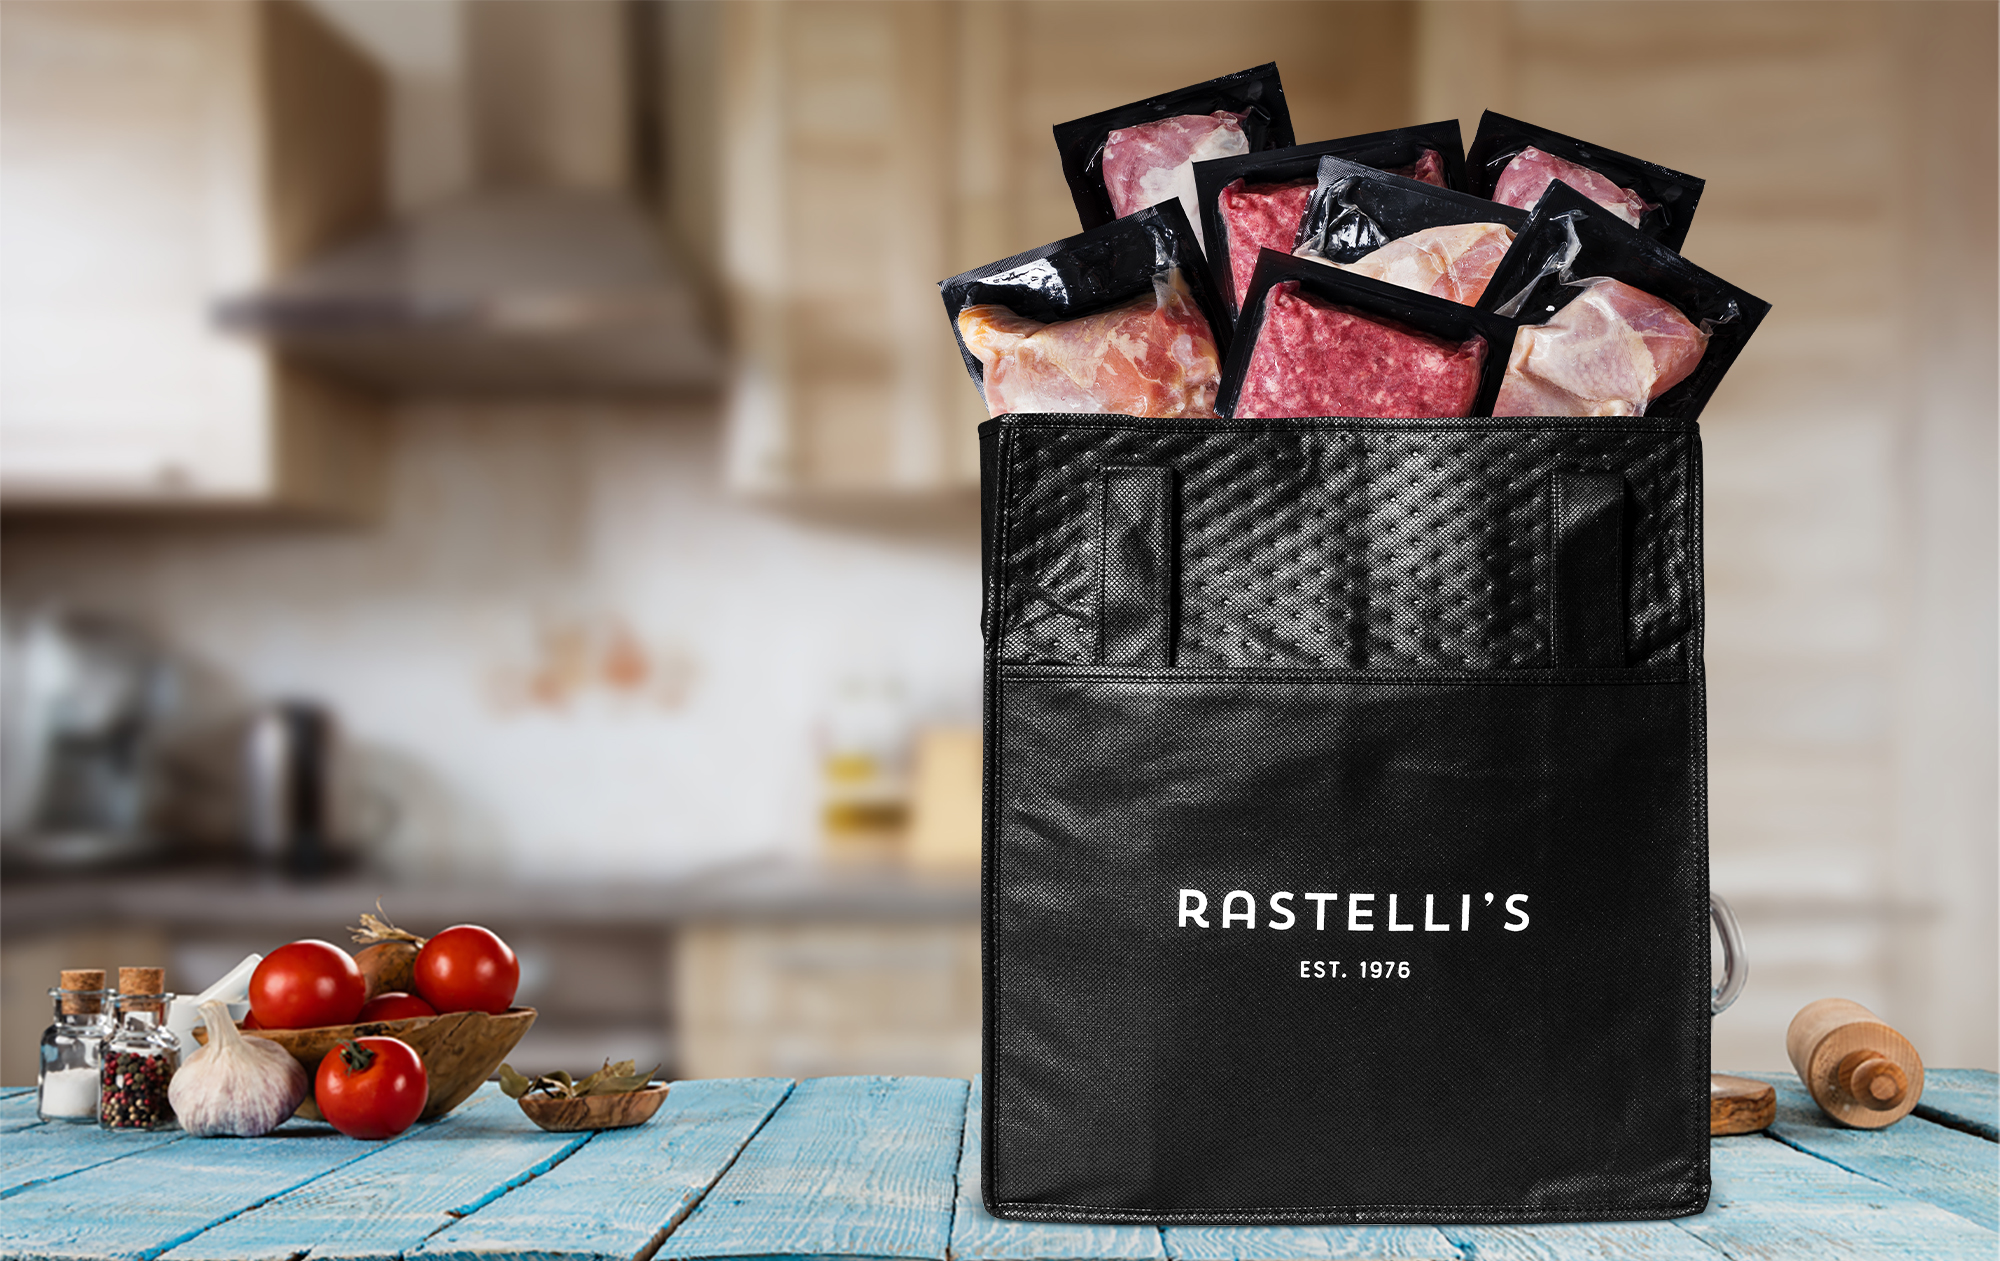 Rastelli''s Bag in Kitchen